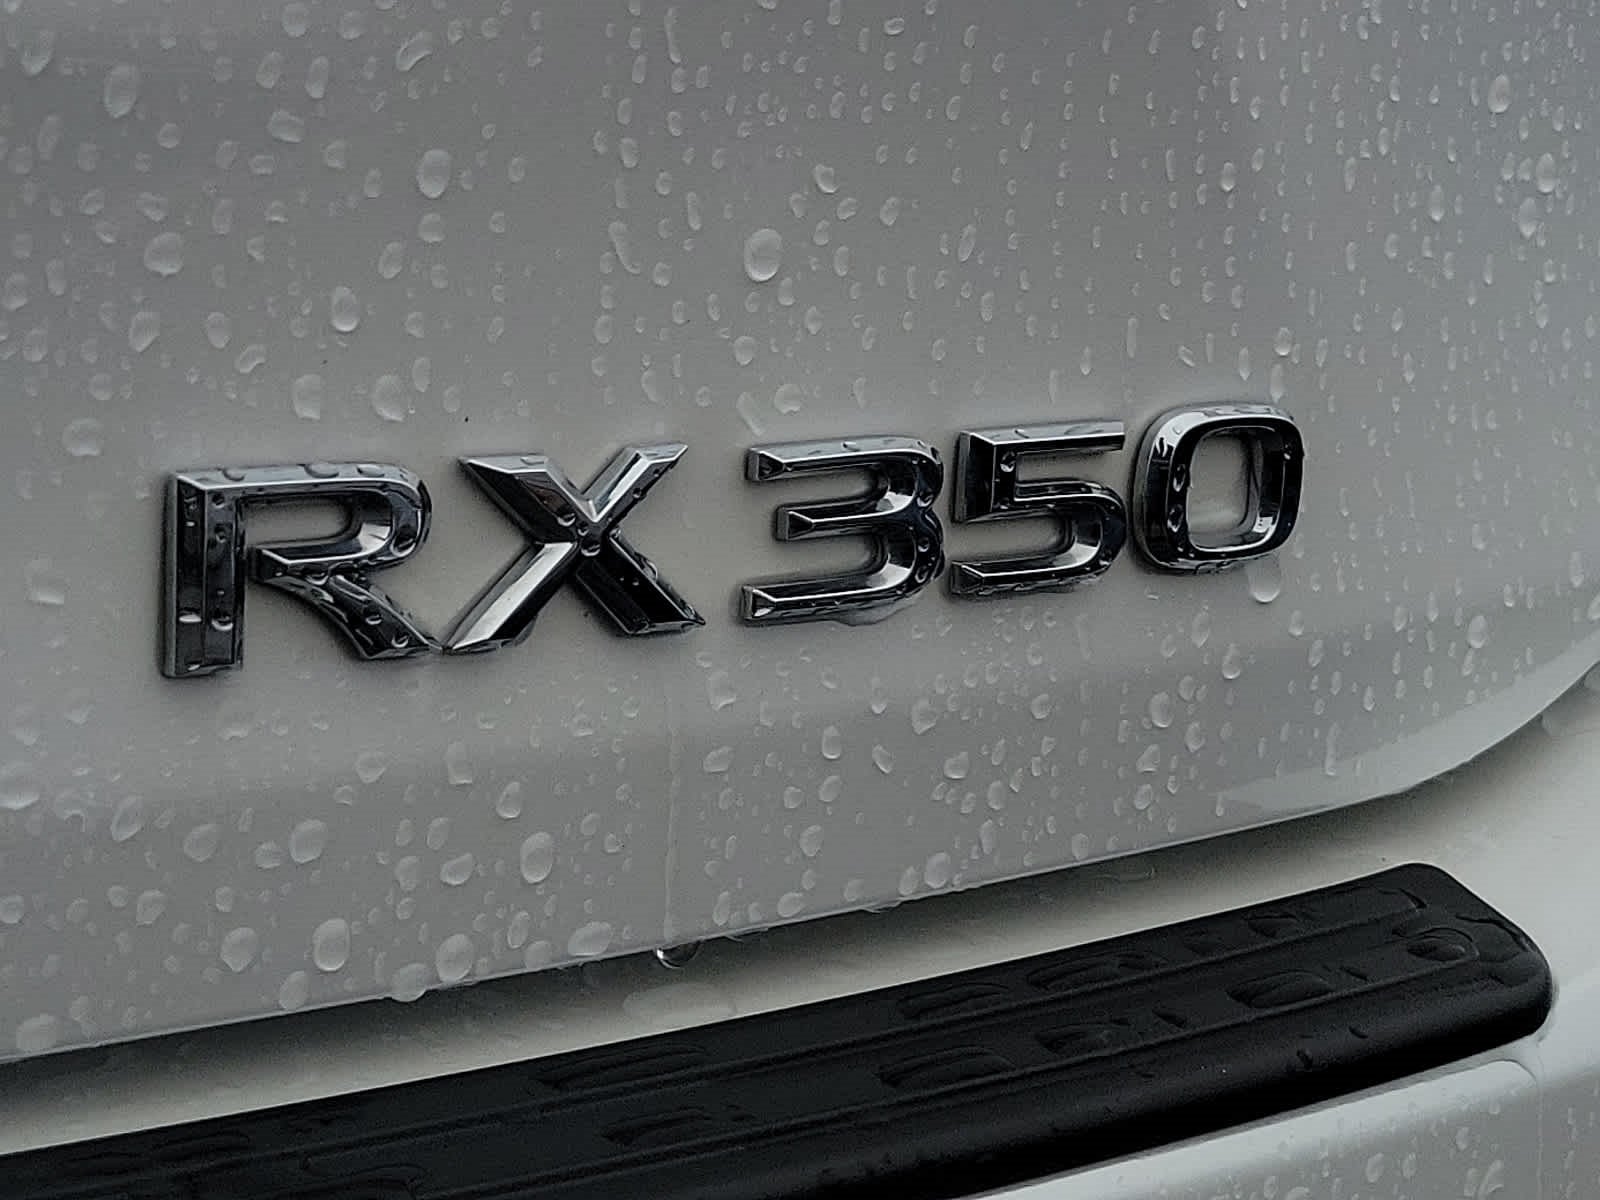 2021 Lexus RX 